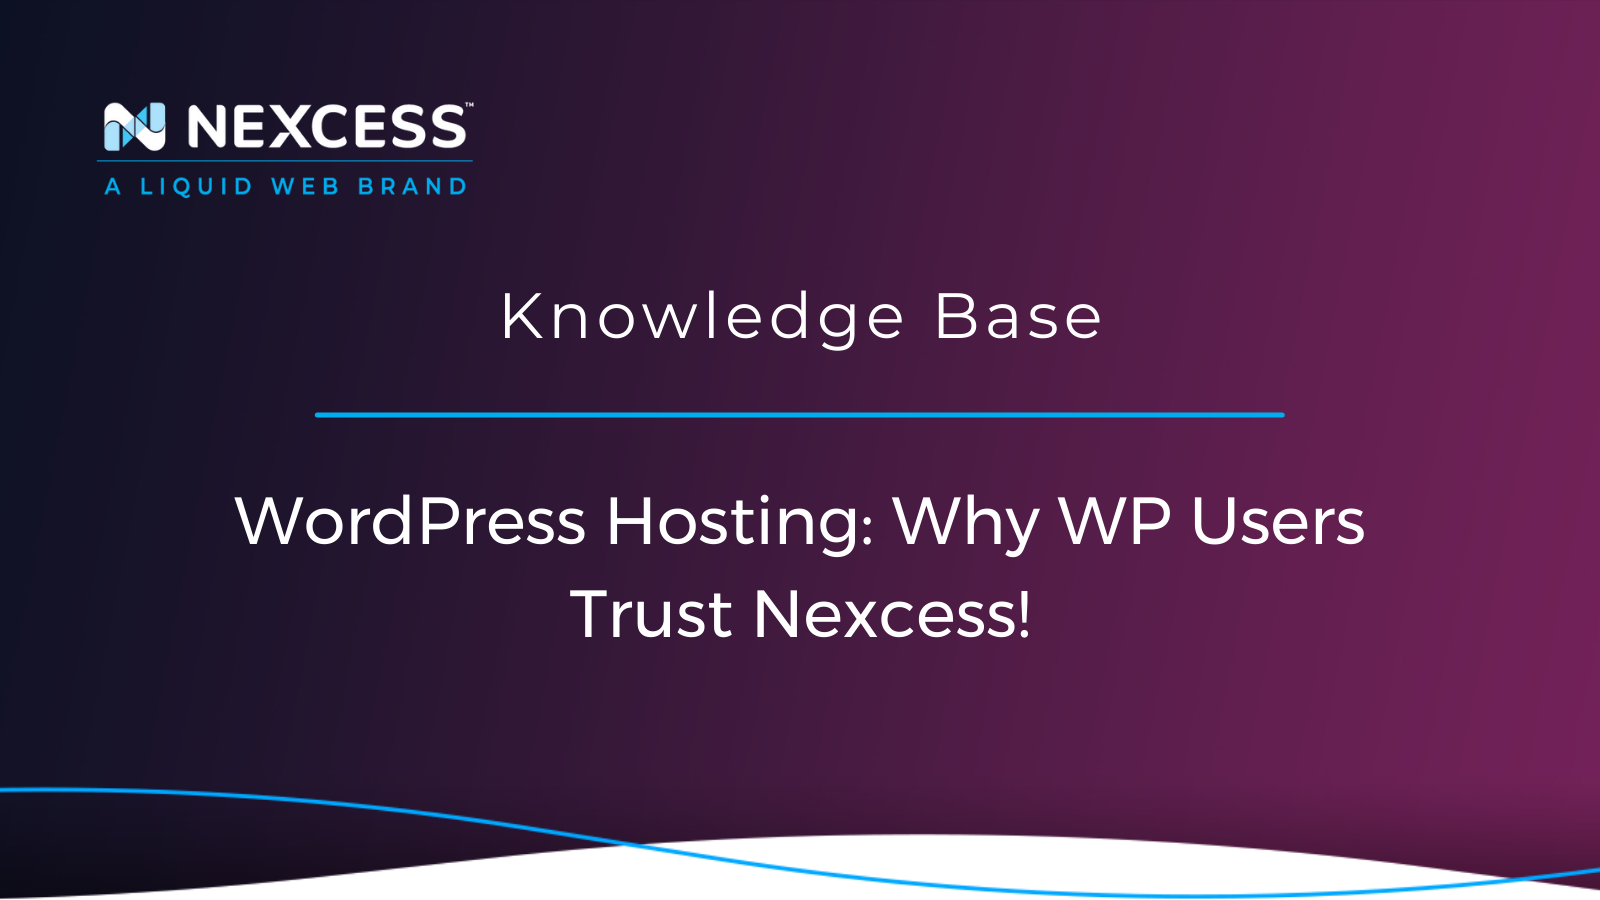 WordPress Hosting: Why WP Users Trust Nexcess